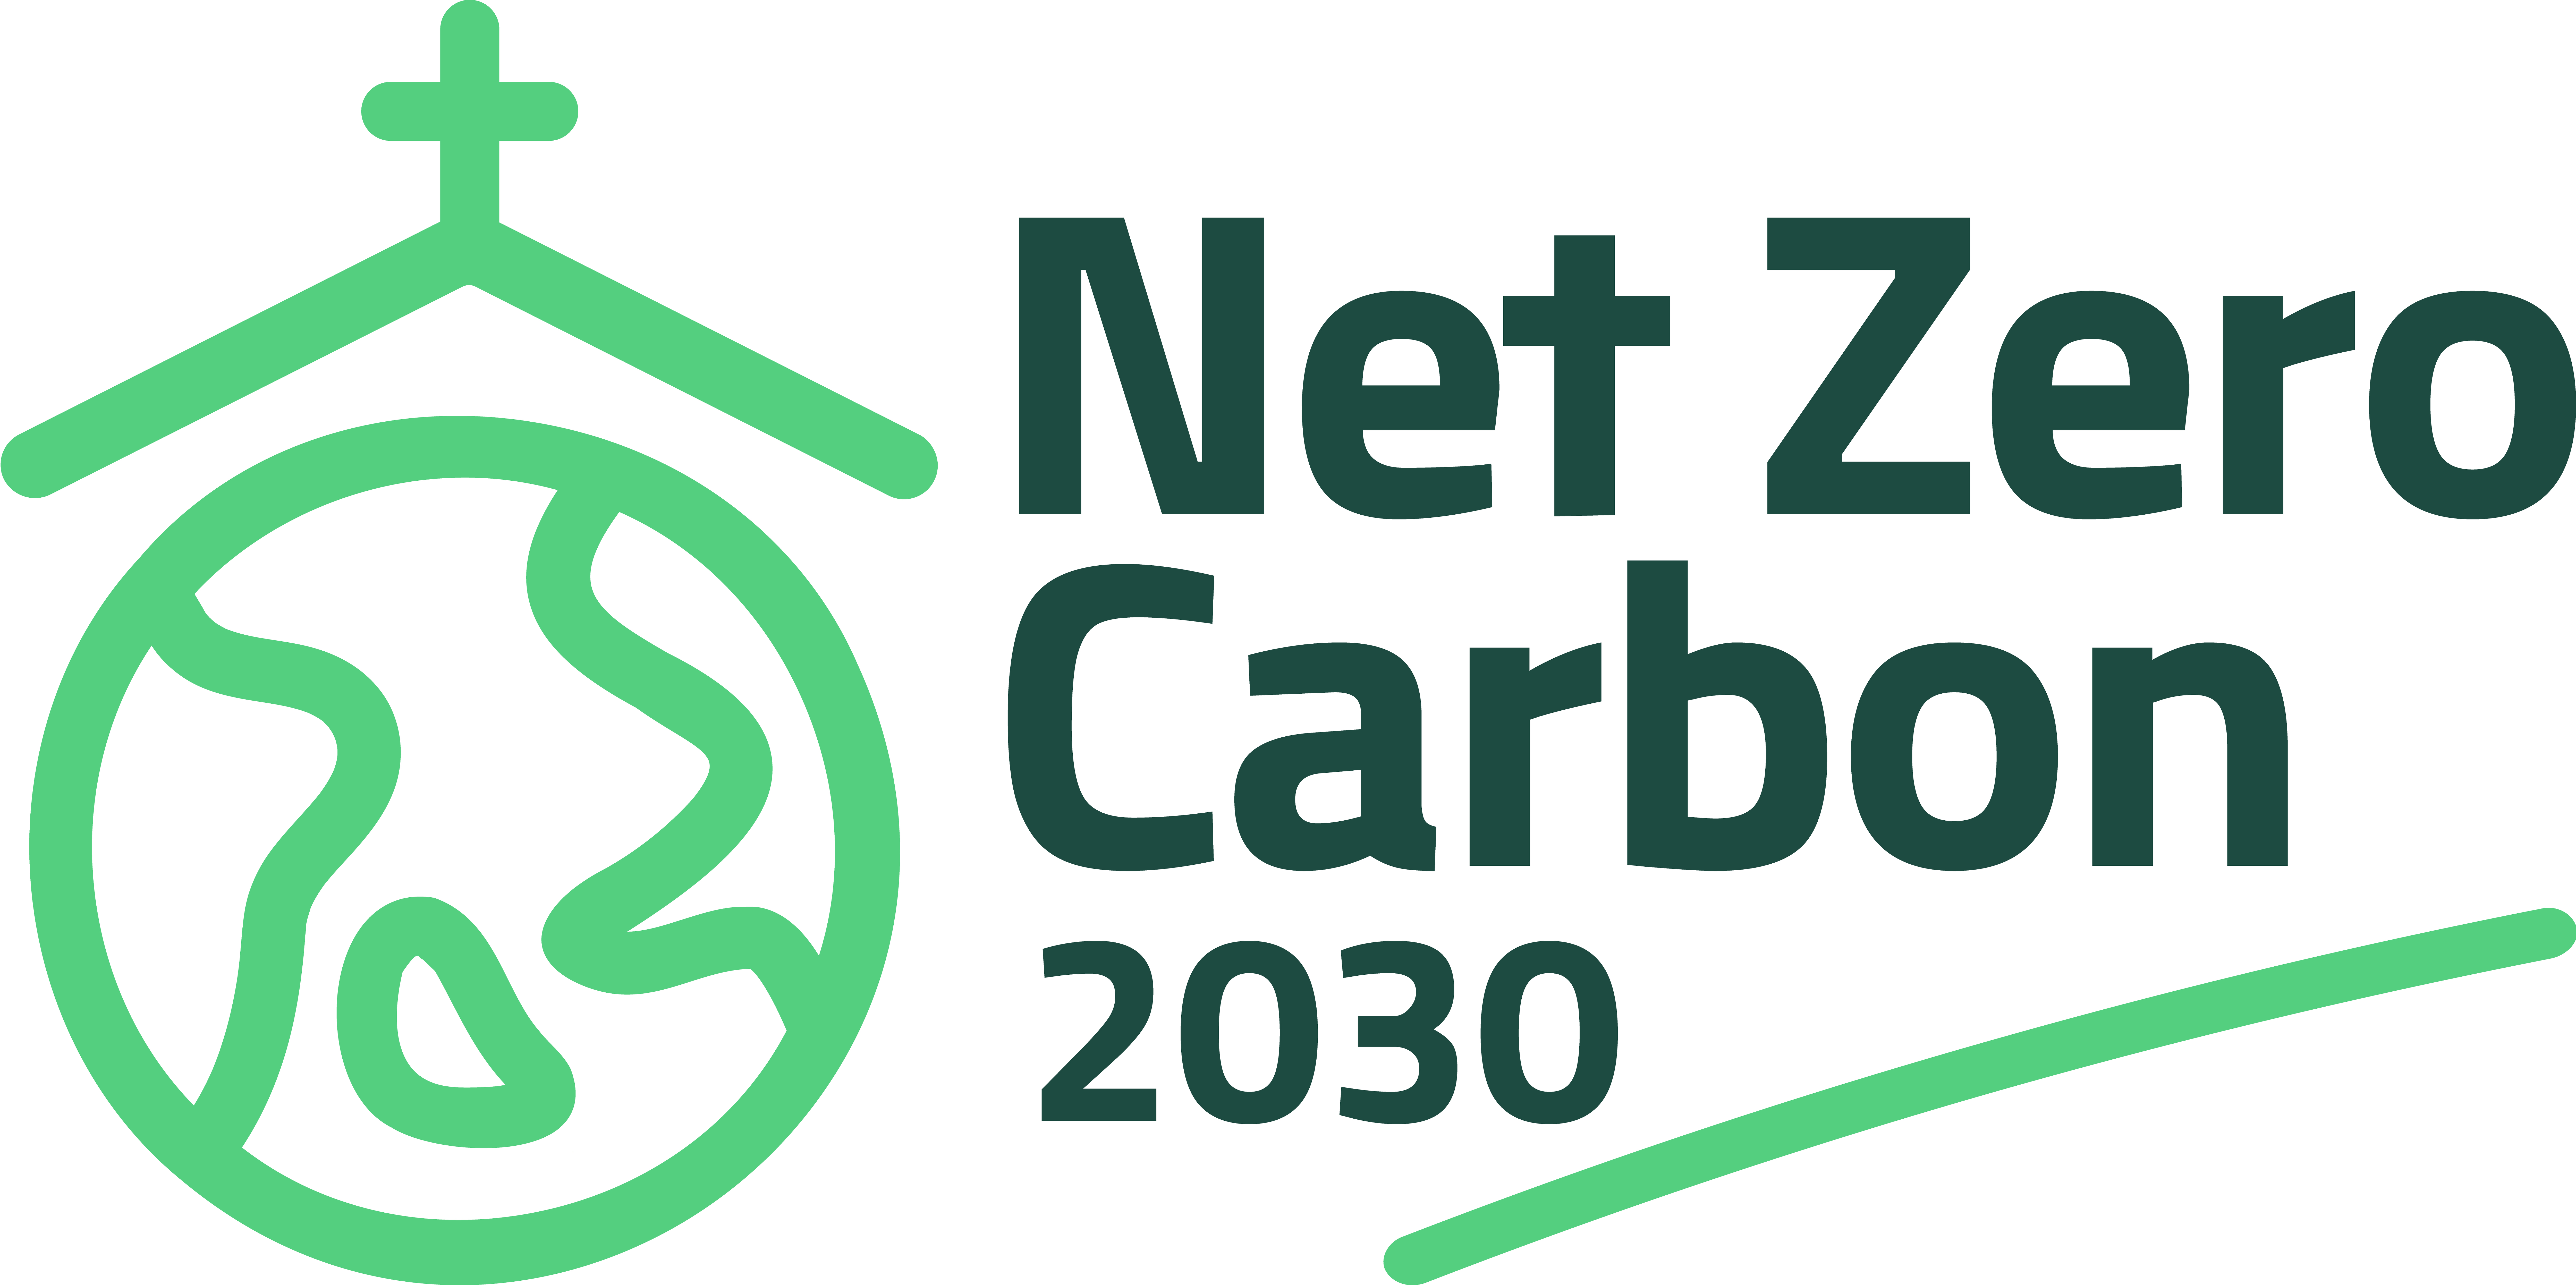 Net Zero Carbon by 2030